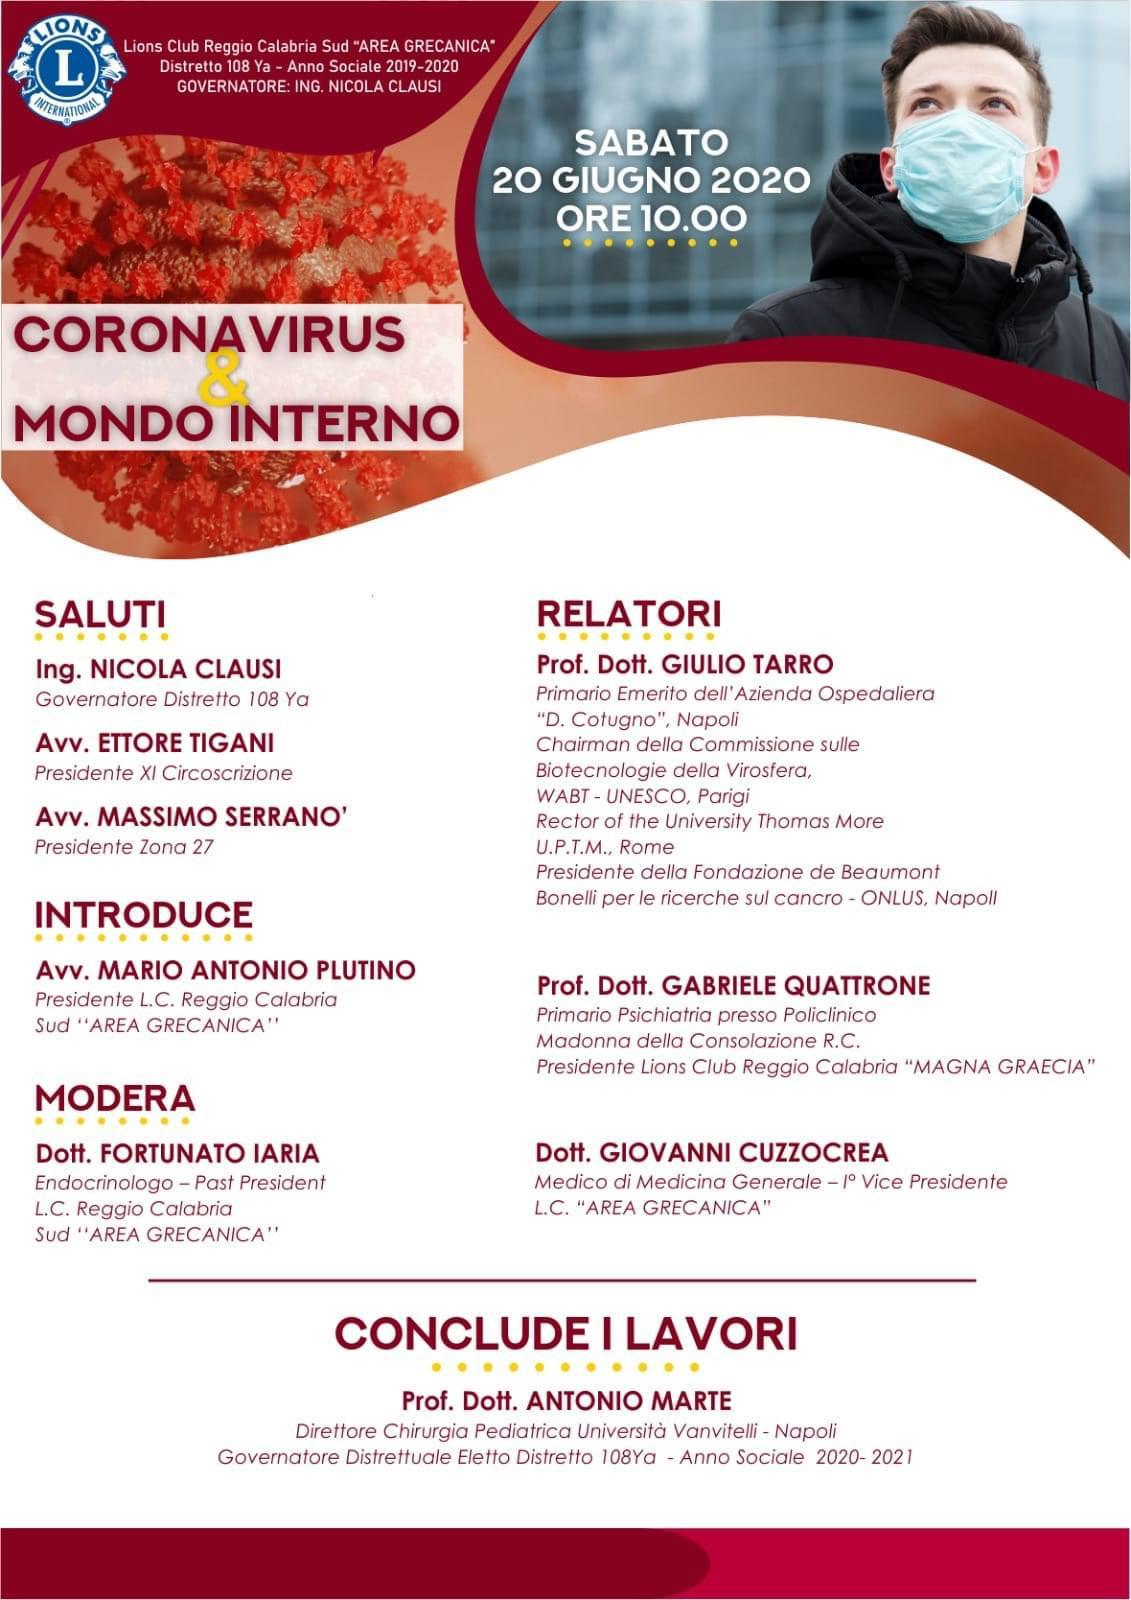 Coronavirus, Lions club Reggio Calabria Sud: focus sulla pandemia dal profilo medico